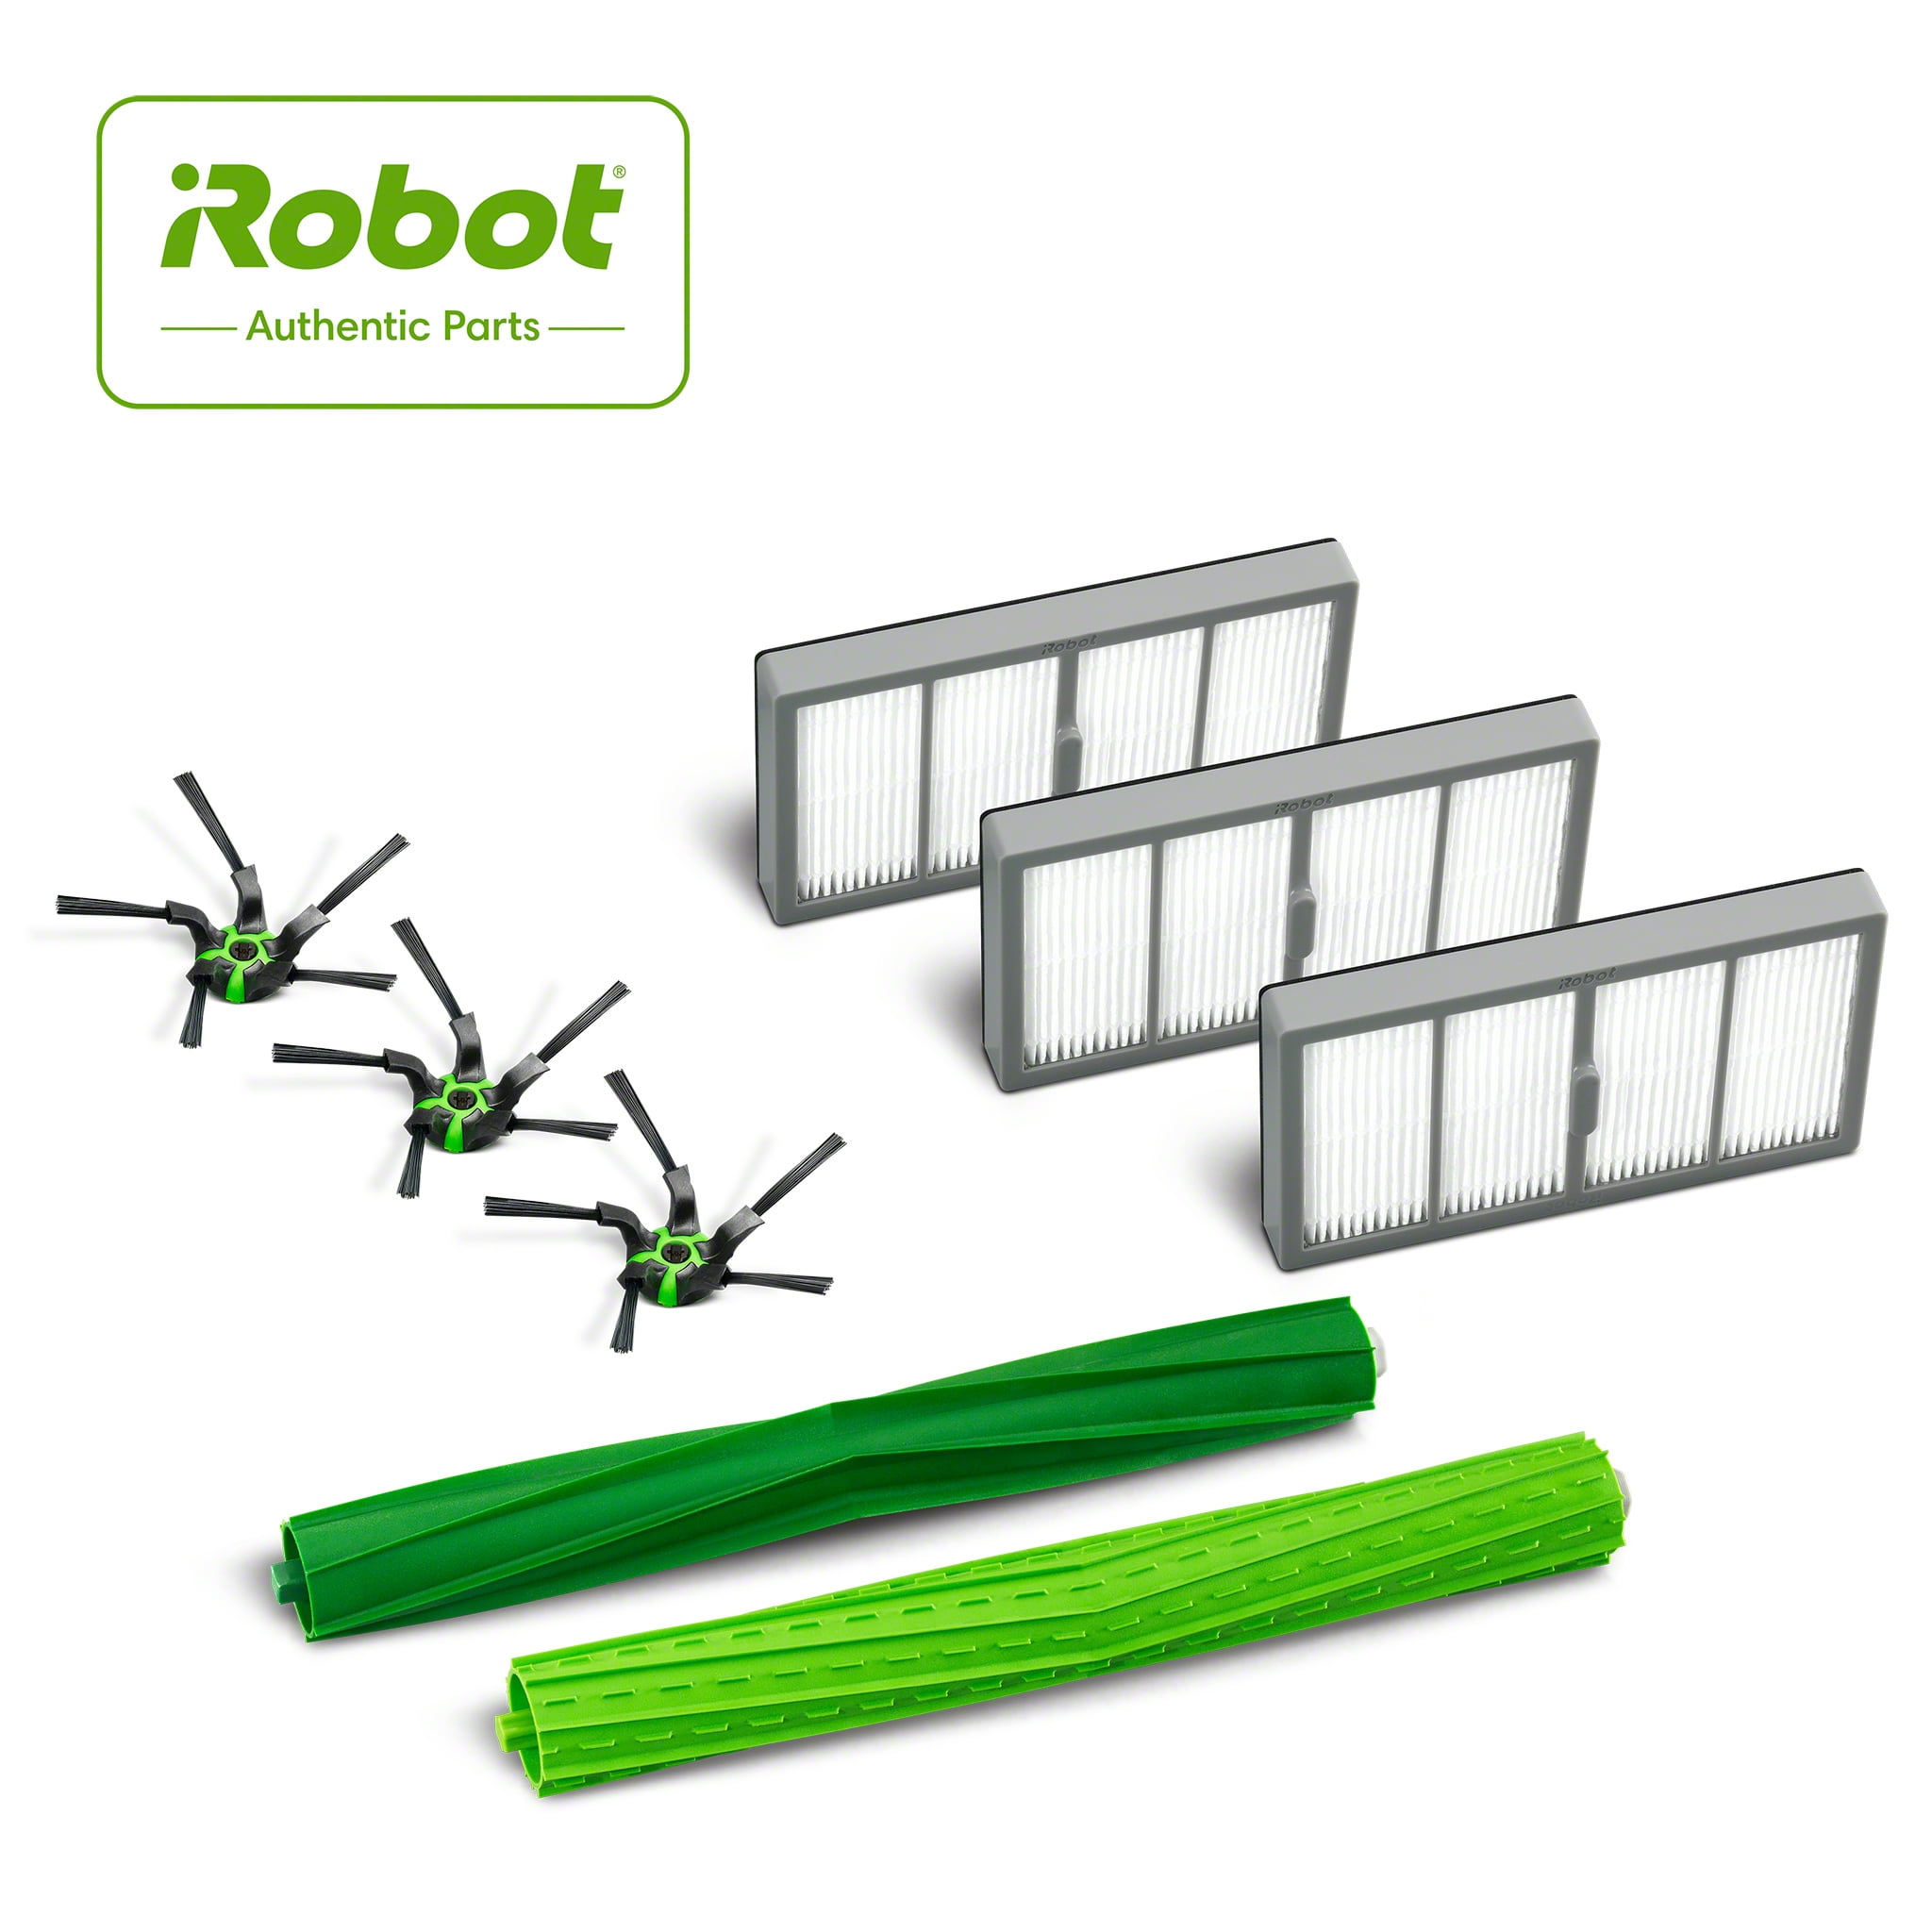 iRobot Authentic Replacement Parts- Roomba s Series Replenishment